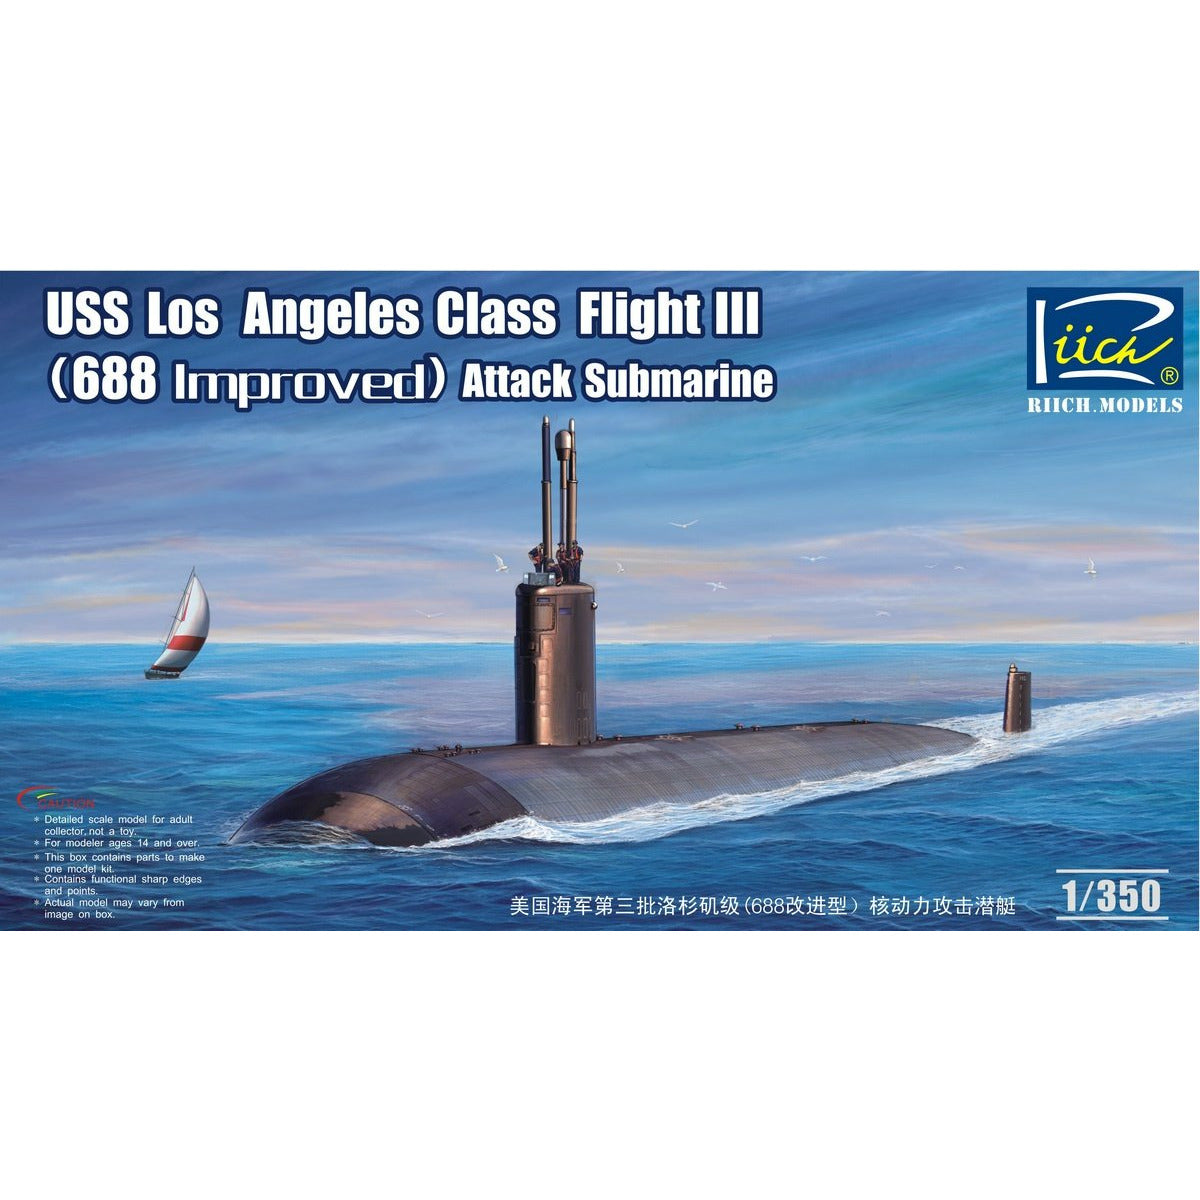 USS Los Angeles Class Flight III (686 Improved) Attach Submarine 1/350 Model Ship Kit #28007 by Riich Models